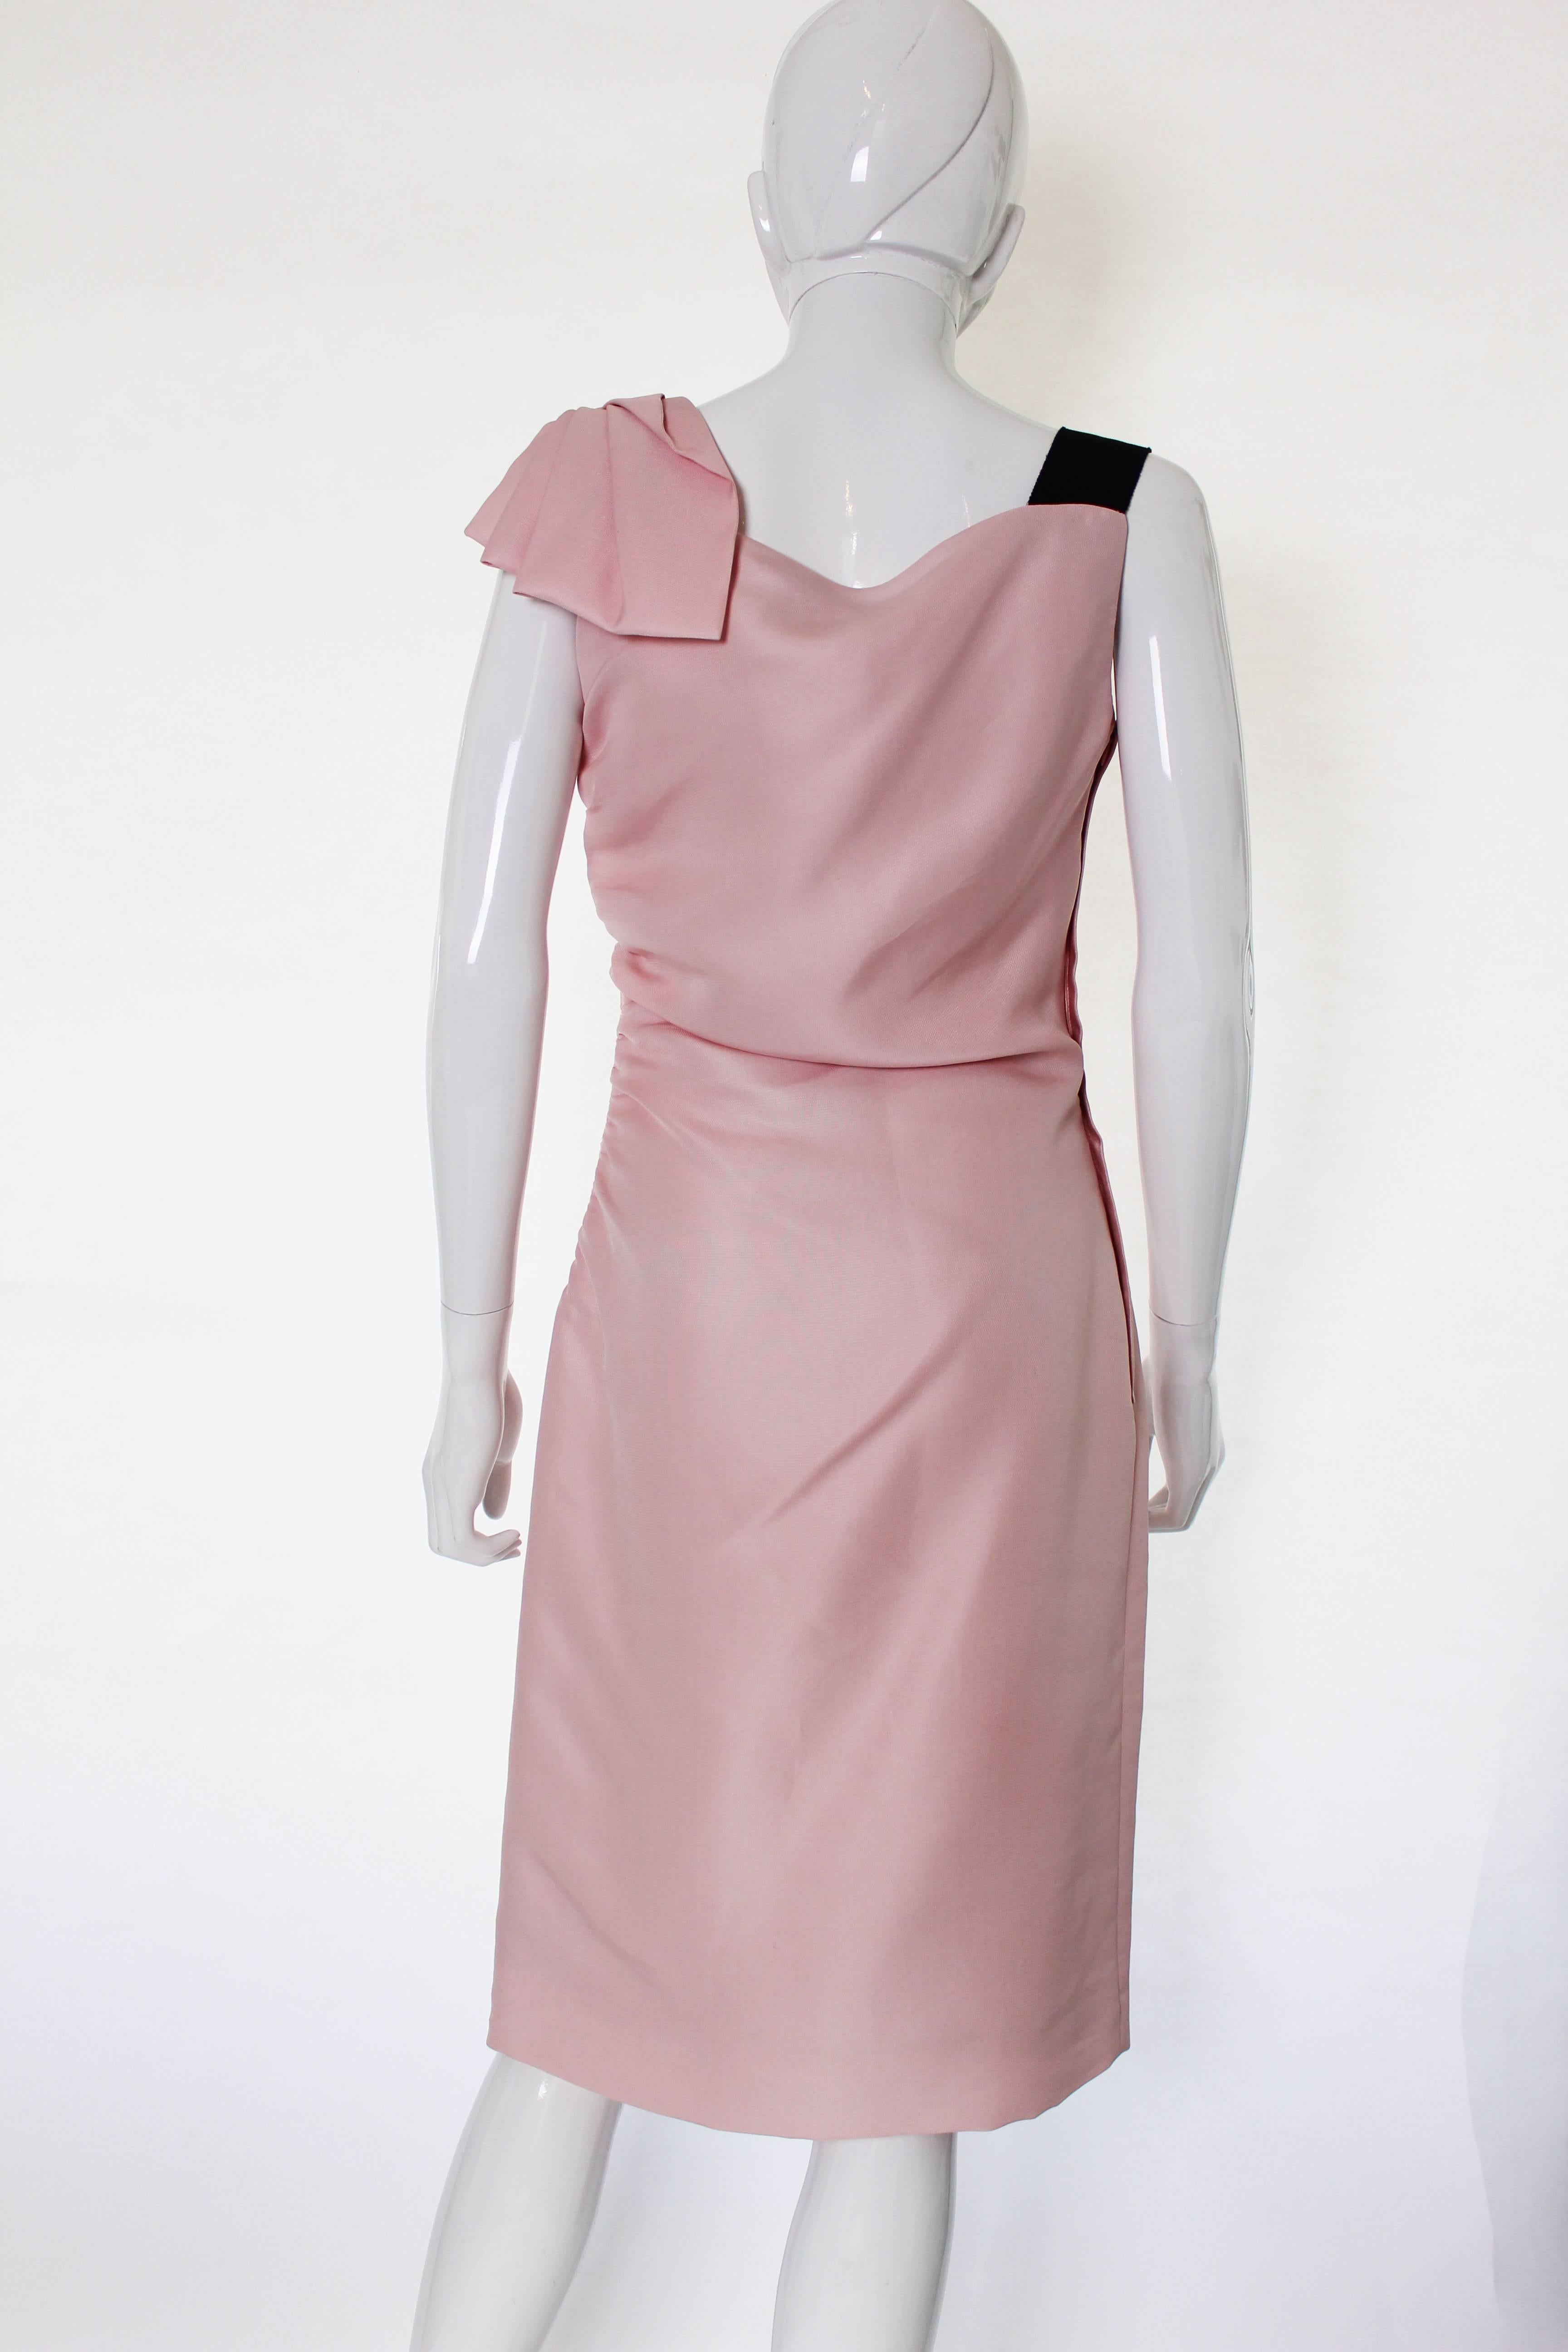 Mid 2000s Valentino Blush Pink Asymmetric Cocktail Dress 1